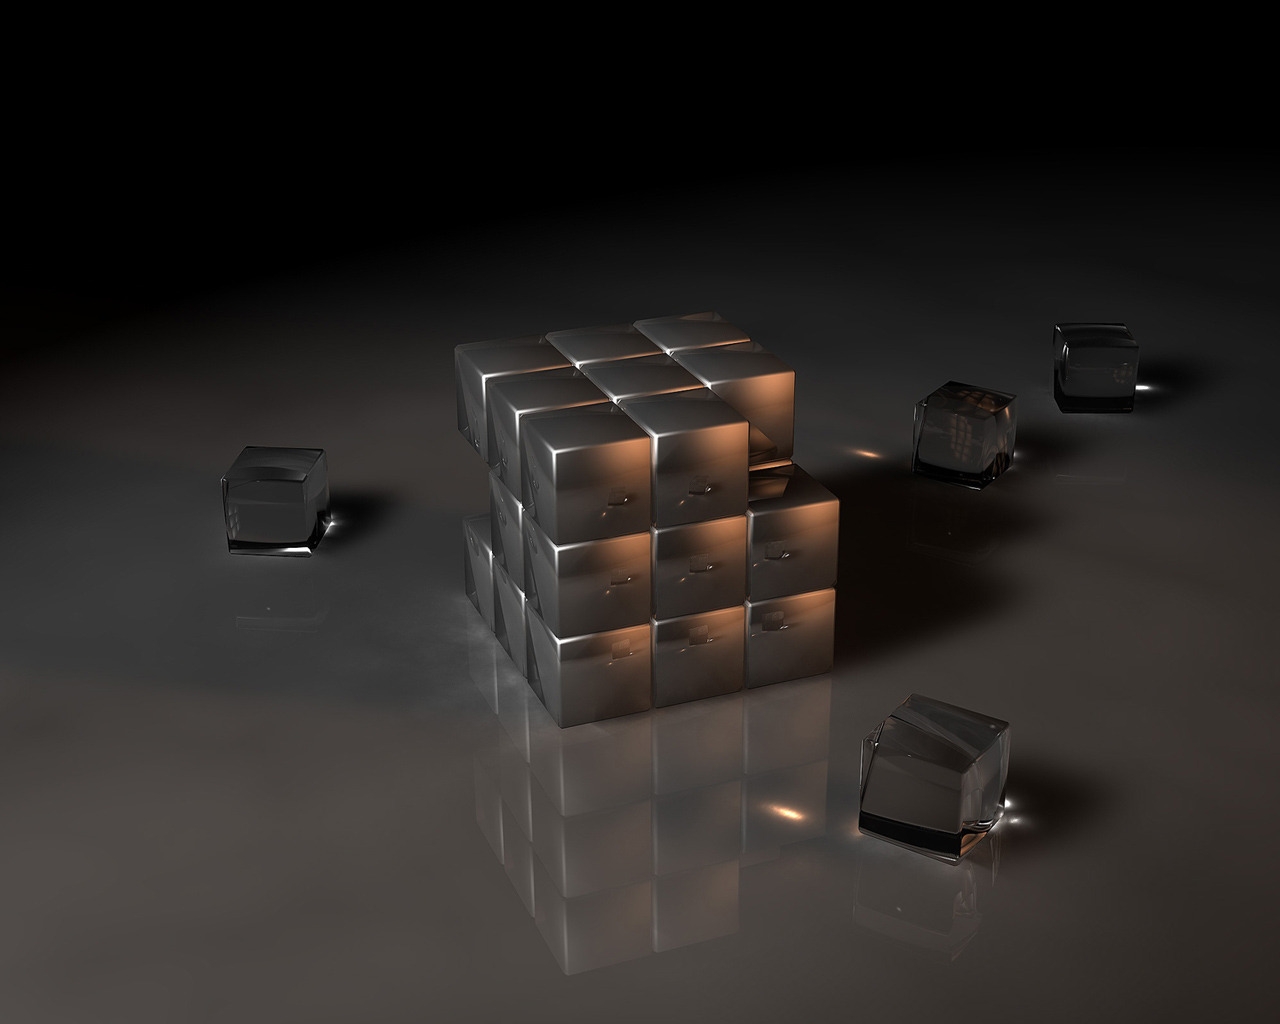 Black Rubiks Cube for 1280 x 1024 resolution